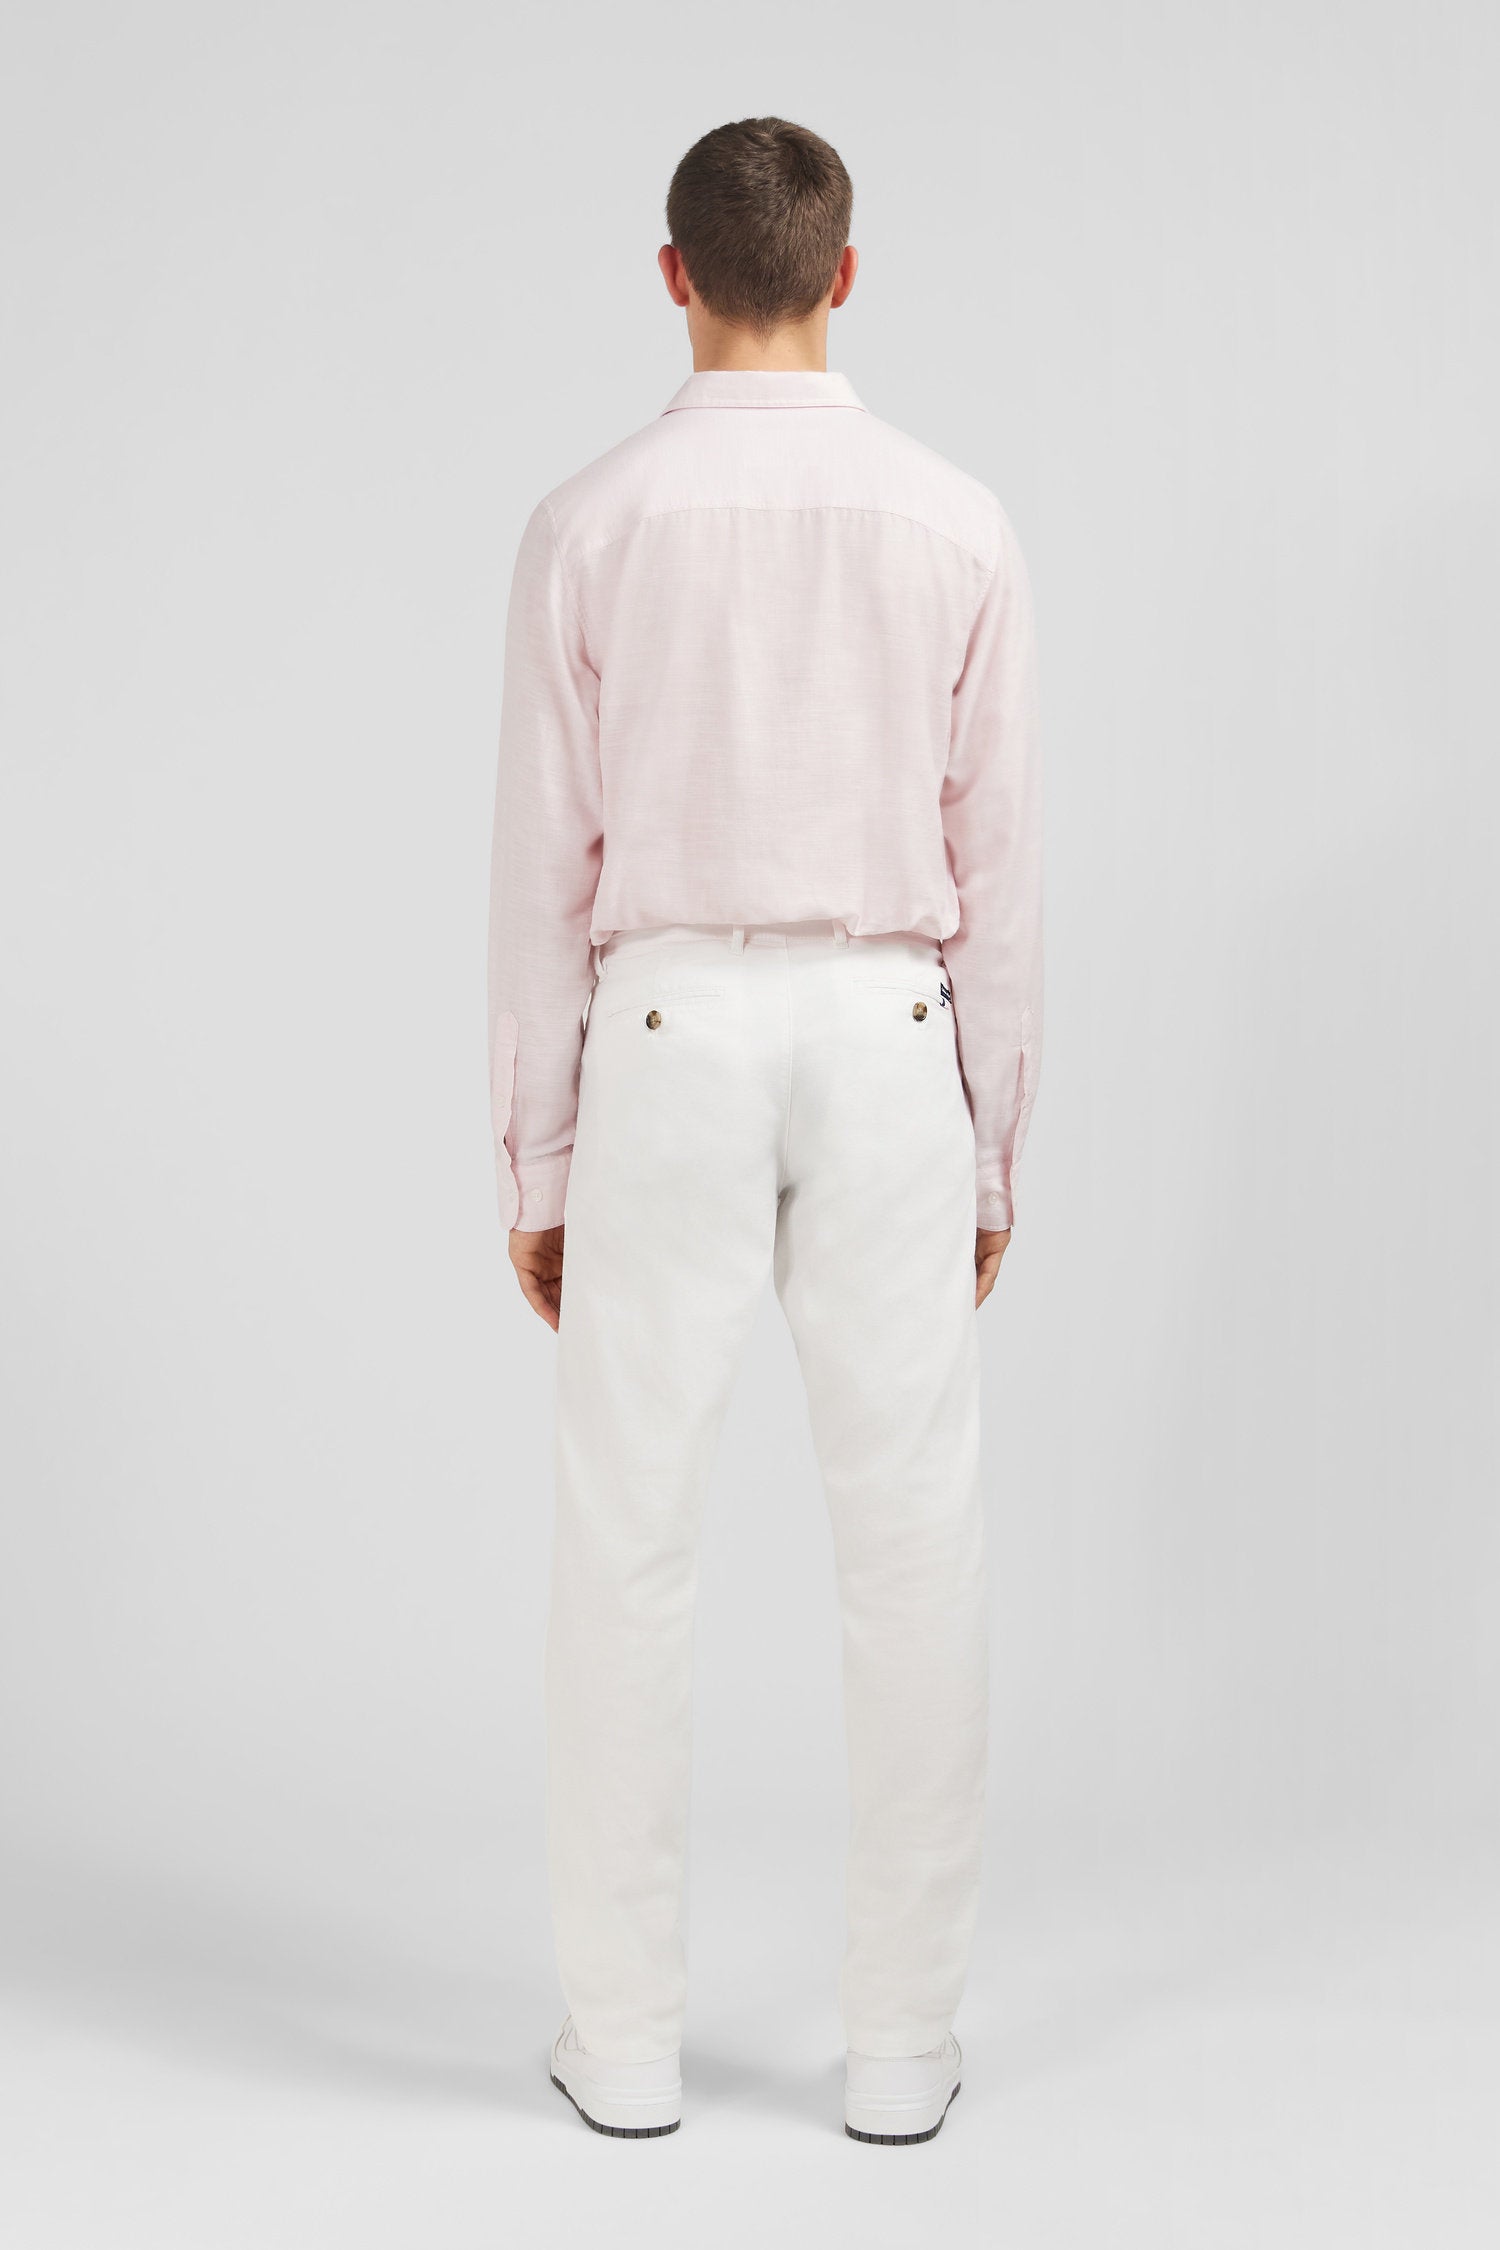 Plain Pink Shirt_E24Checl0018_Roc11_03